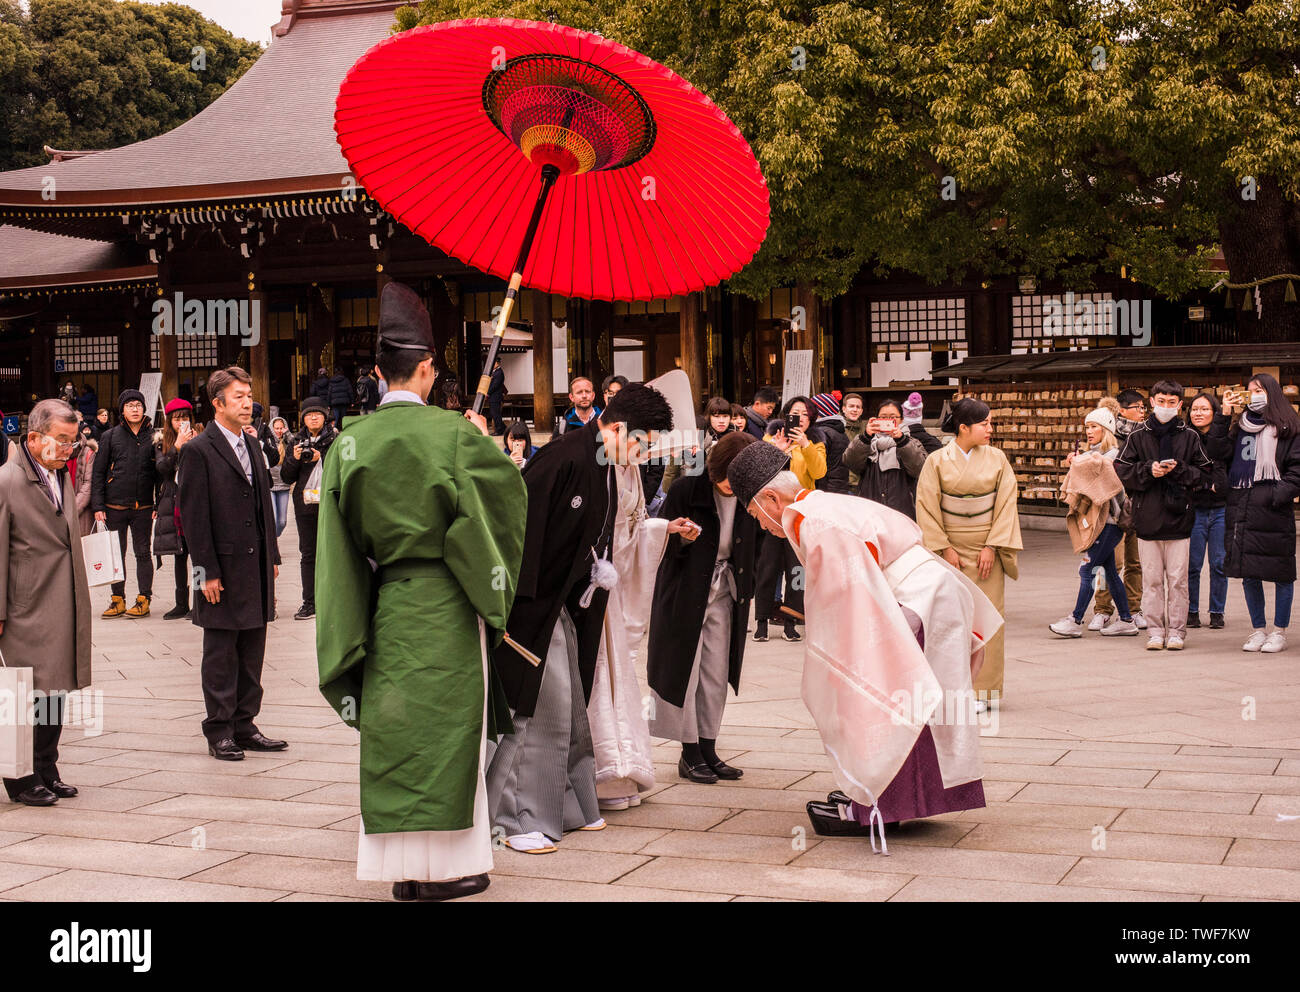 Onlookers watching traditional wedding at Meiji Jingu Shrine in Shibuya Tokyo in Japan. Stock Photo